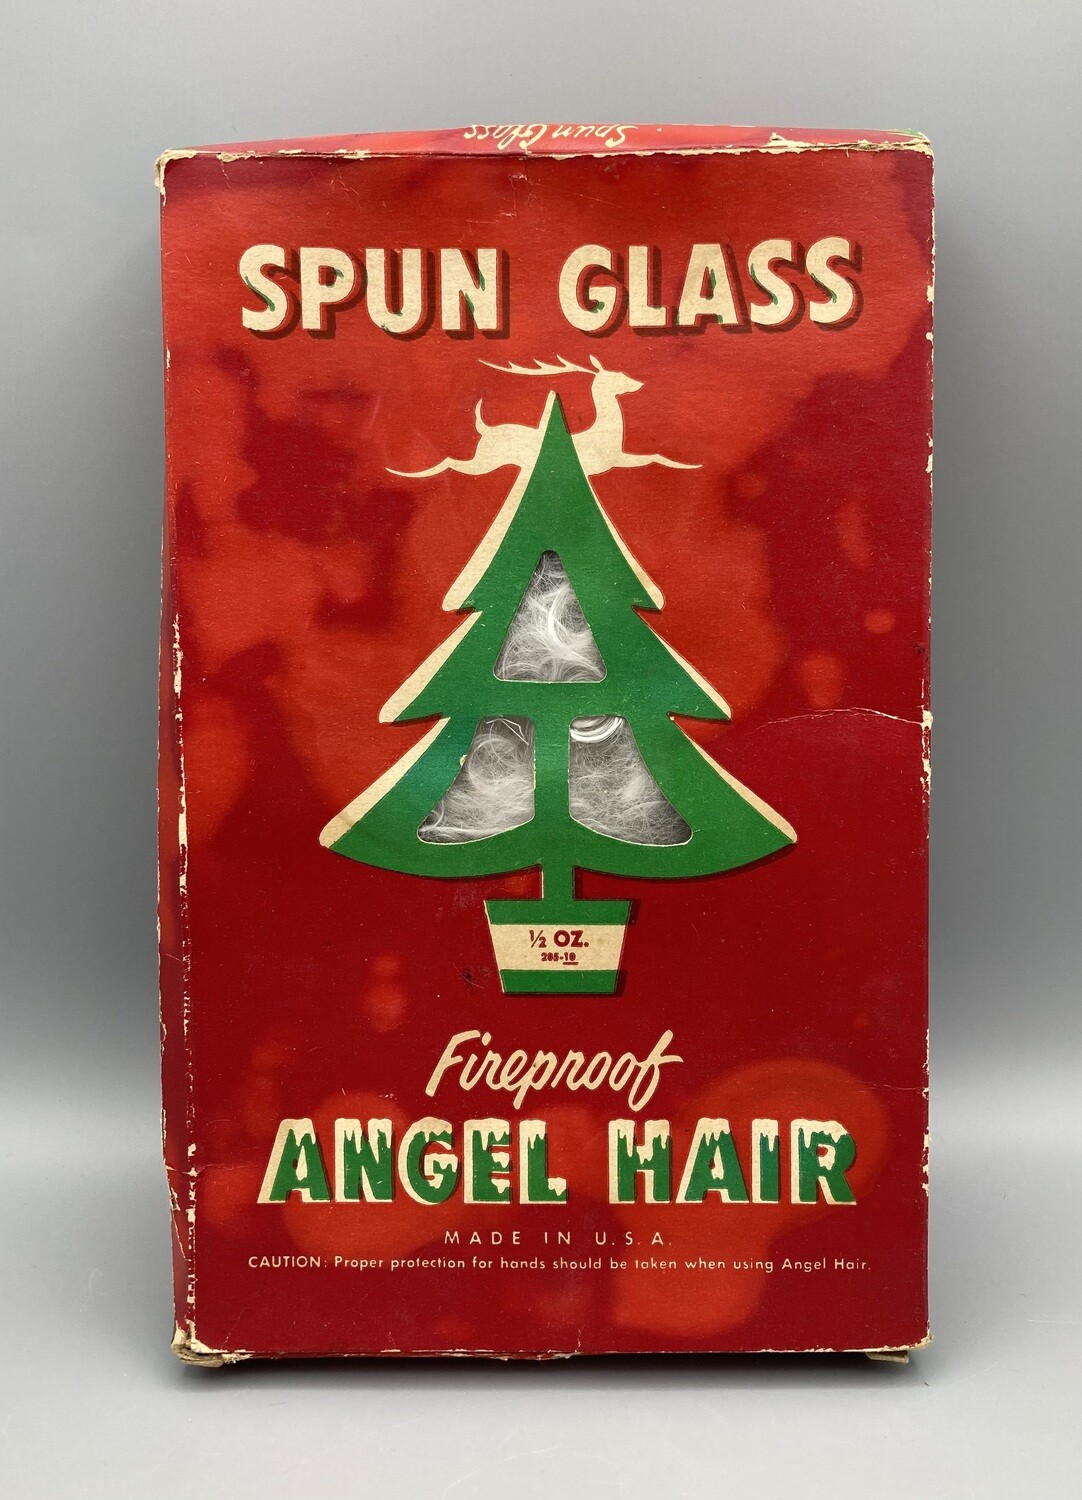 Spun Glass Angel Hair